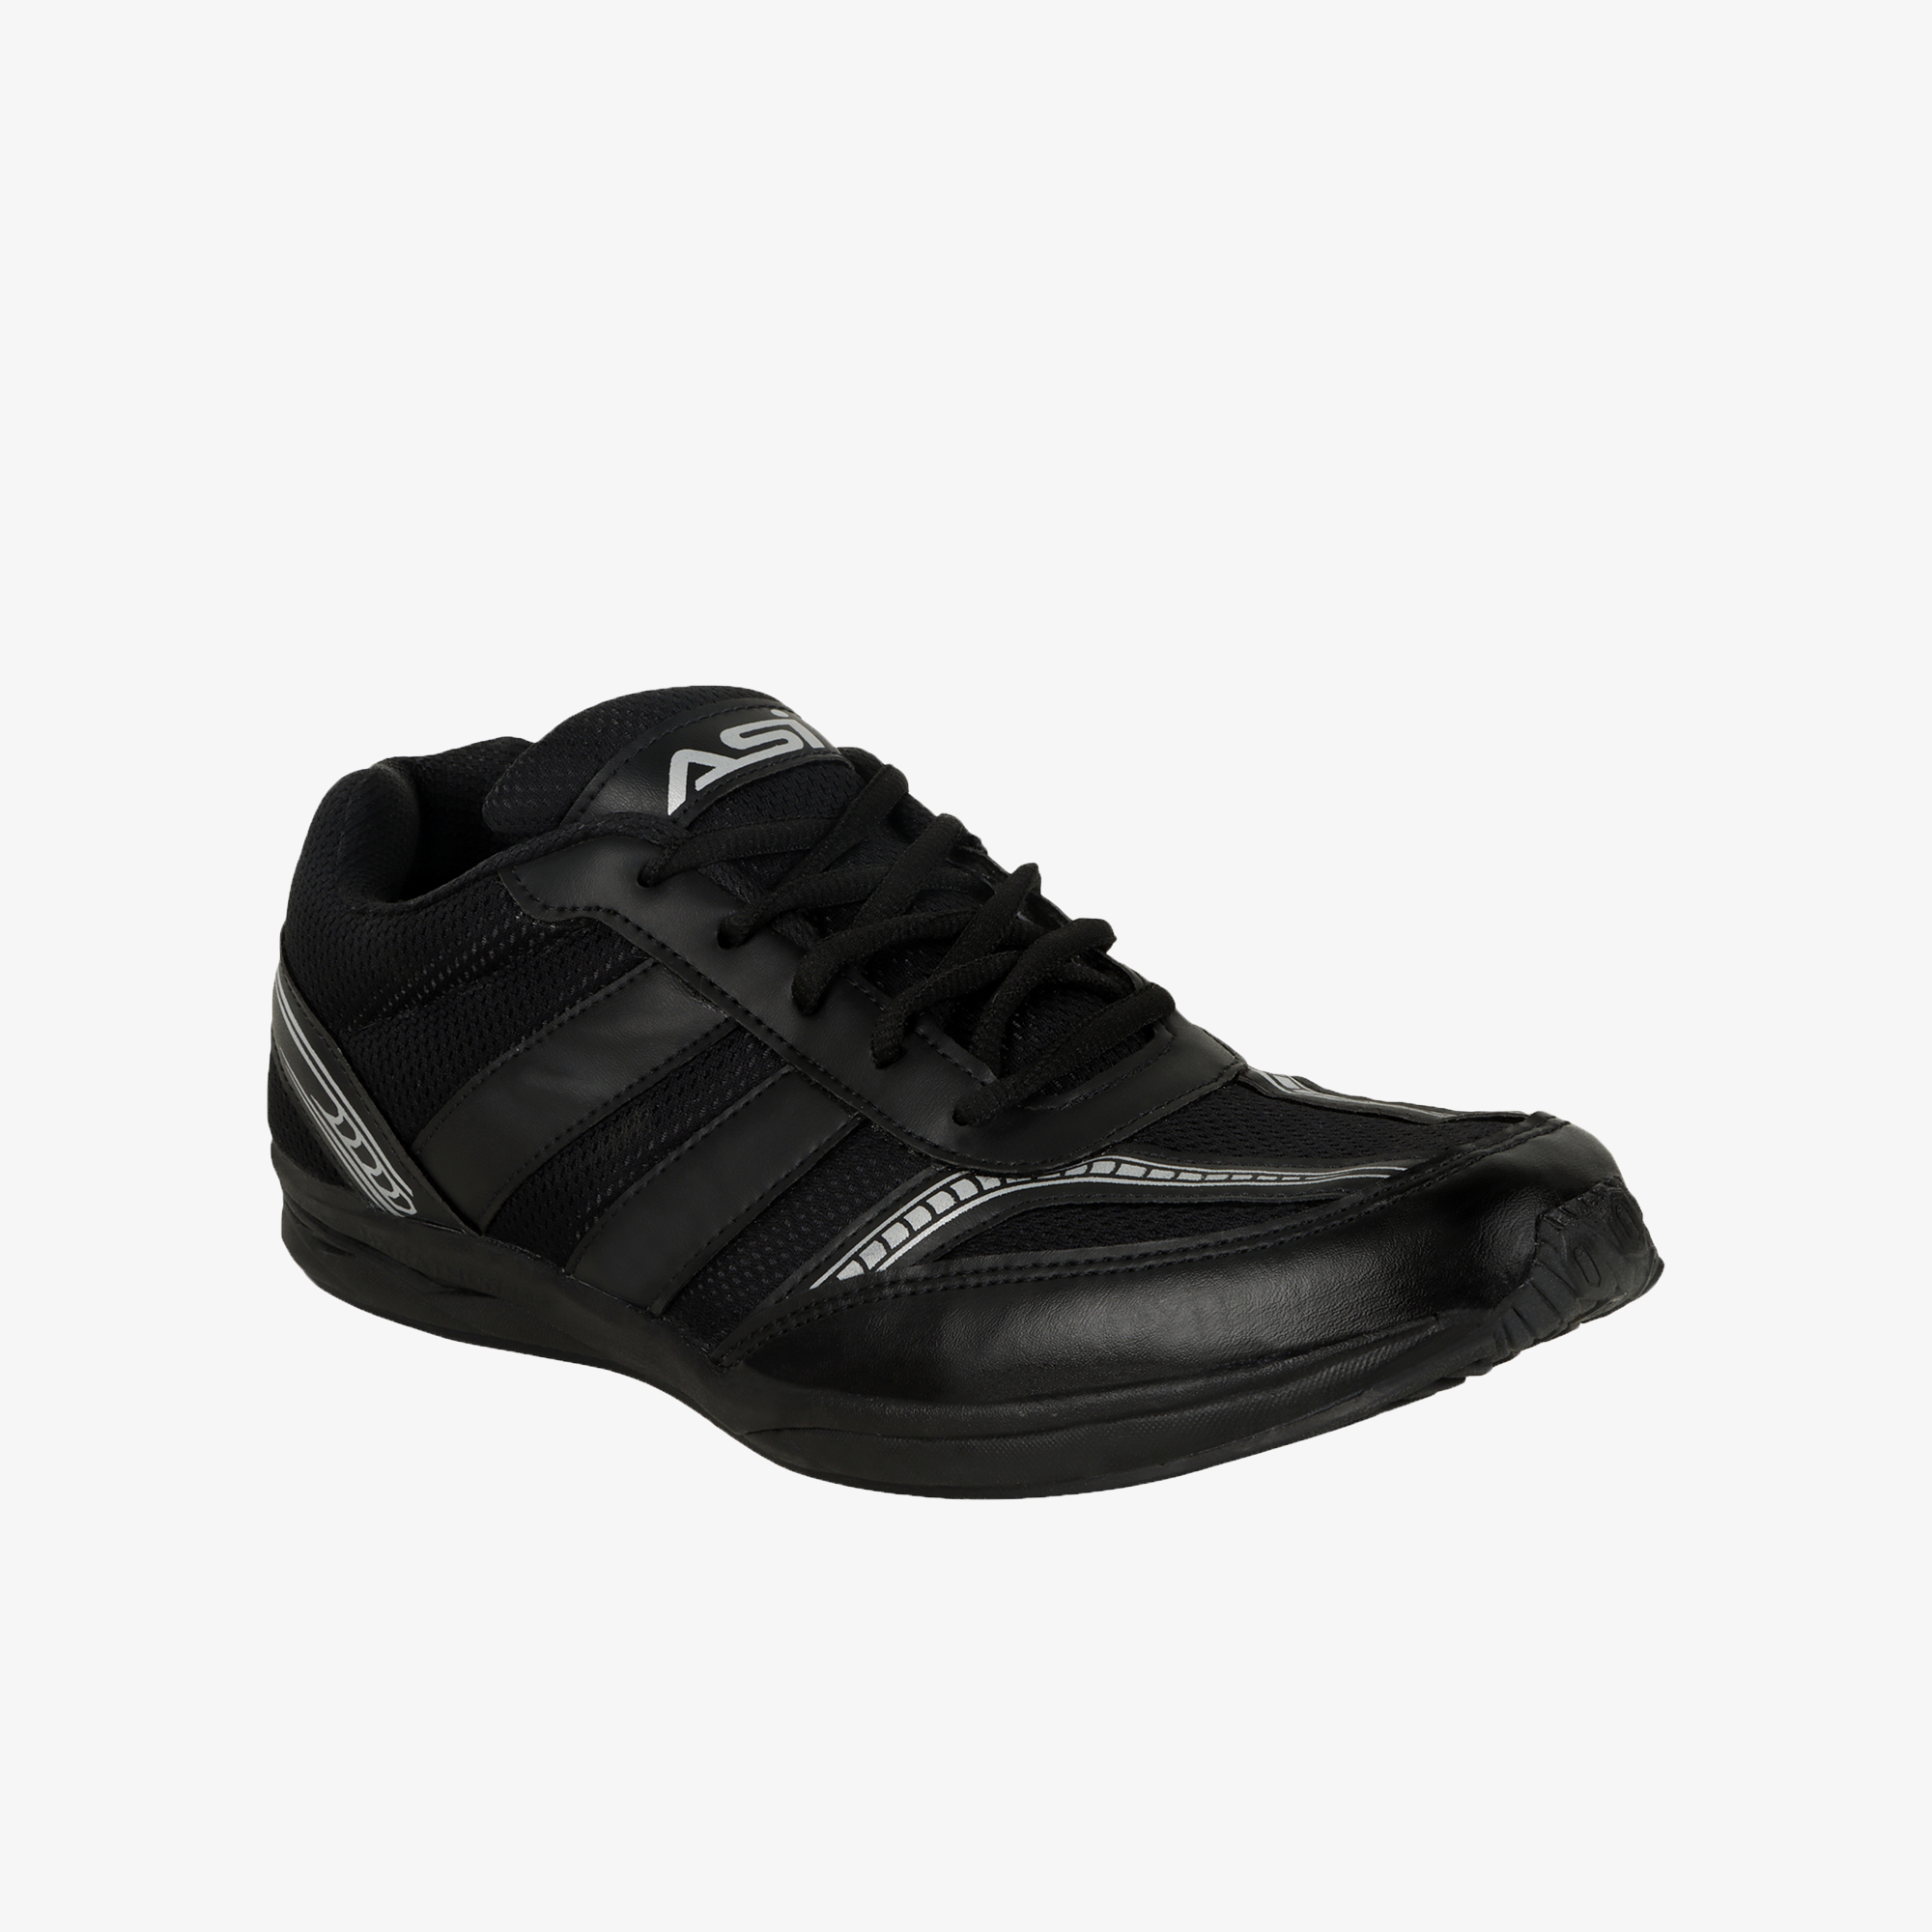 ASI Sprint Sports Shoes Black Color